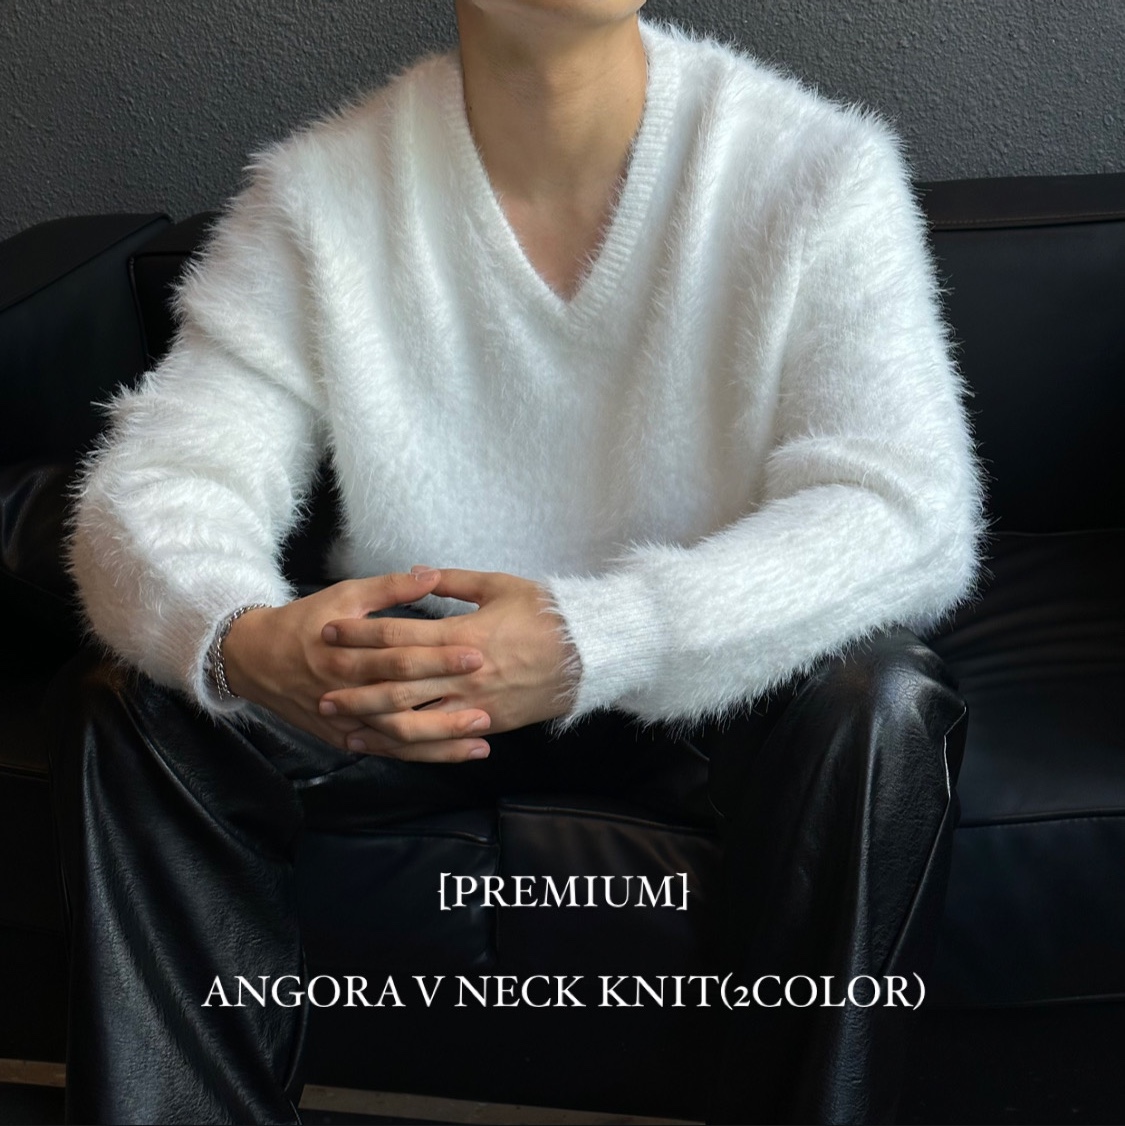 [Premium] Angora v neck knit(2color)